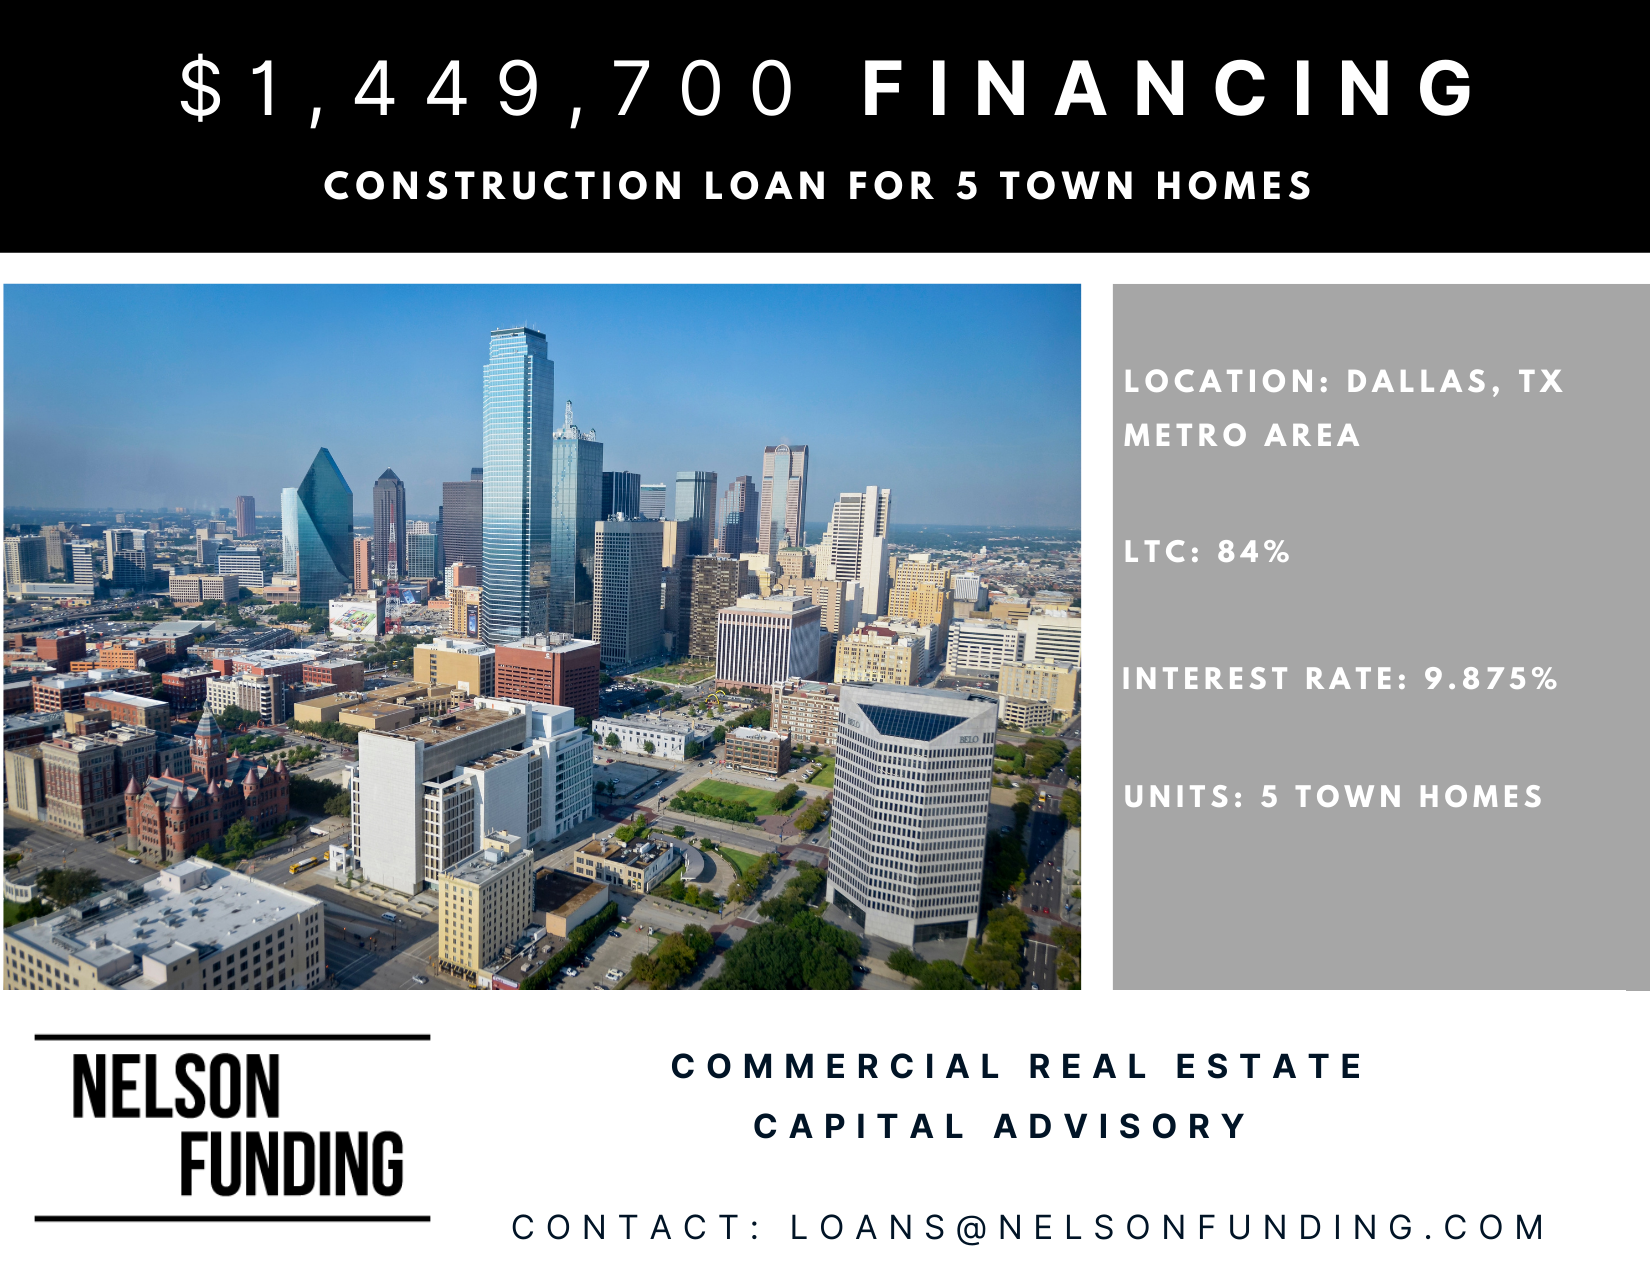 Nelson Funding Closes Dallas, TX Construction Loan